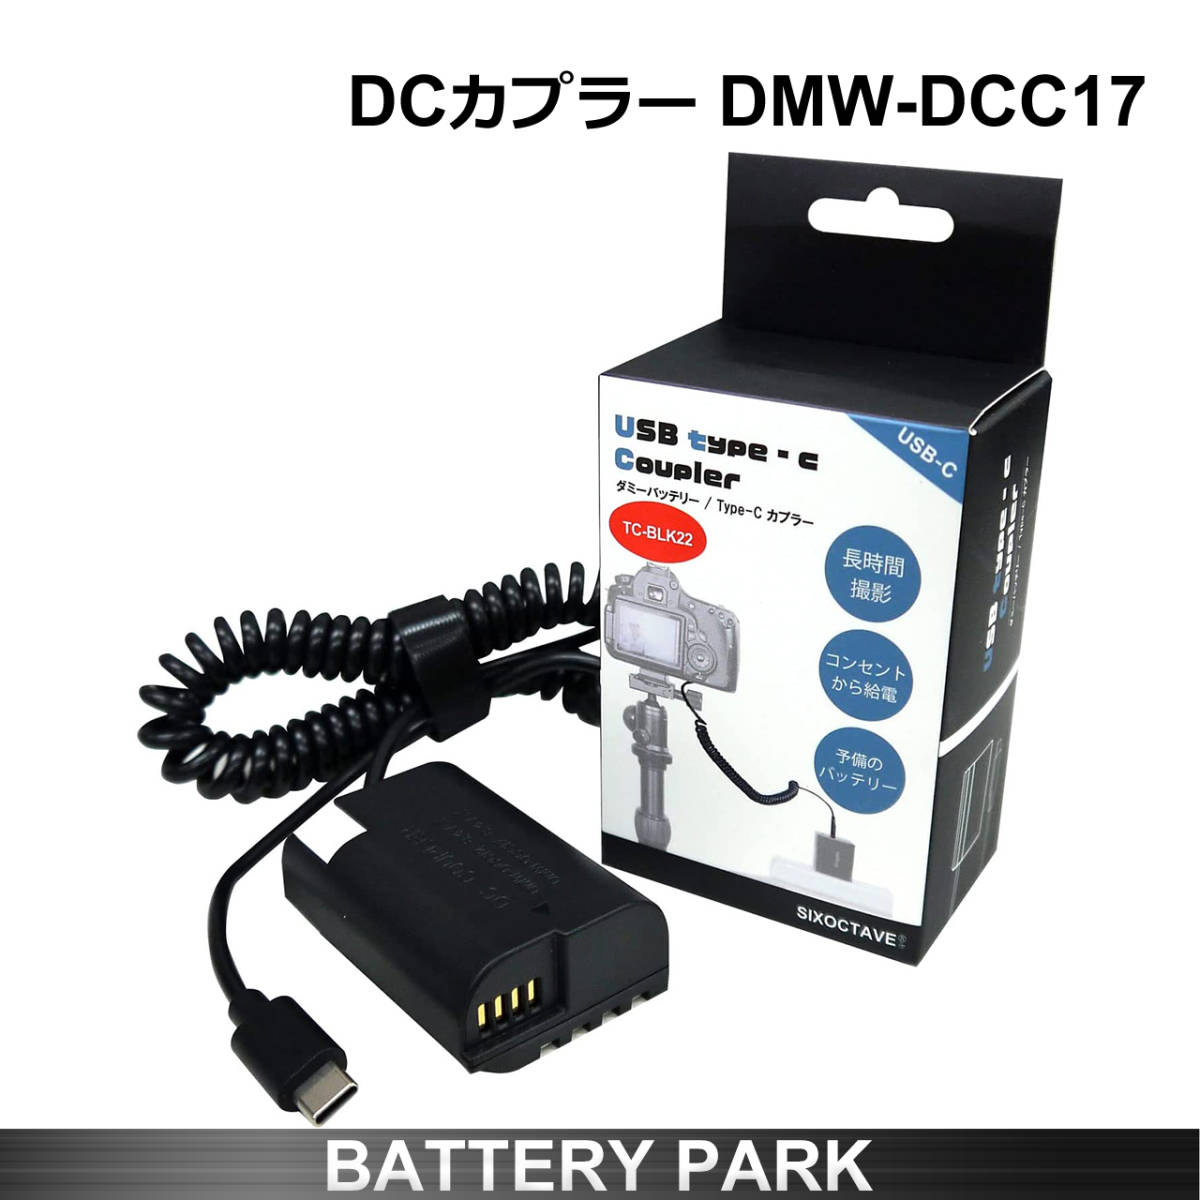  Panasonic DMW-DCC17 interchangeable DC coupler LUMIX Lumix S5 series exclusive use DMW-BLK22